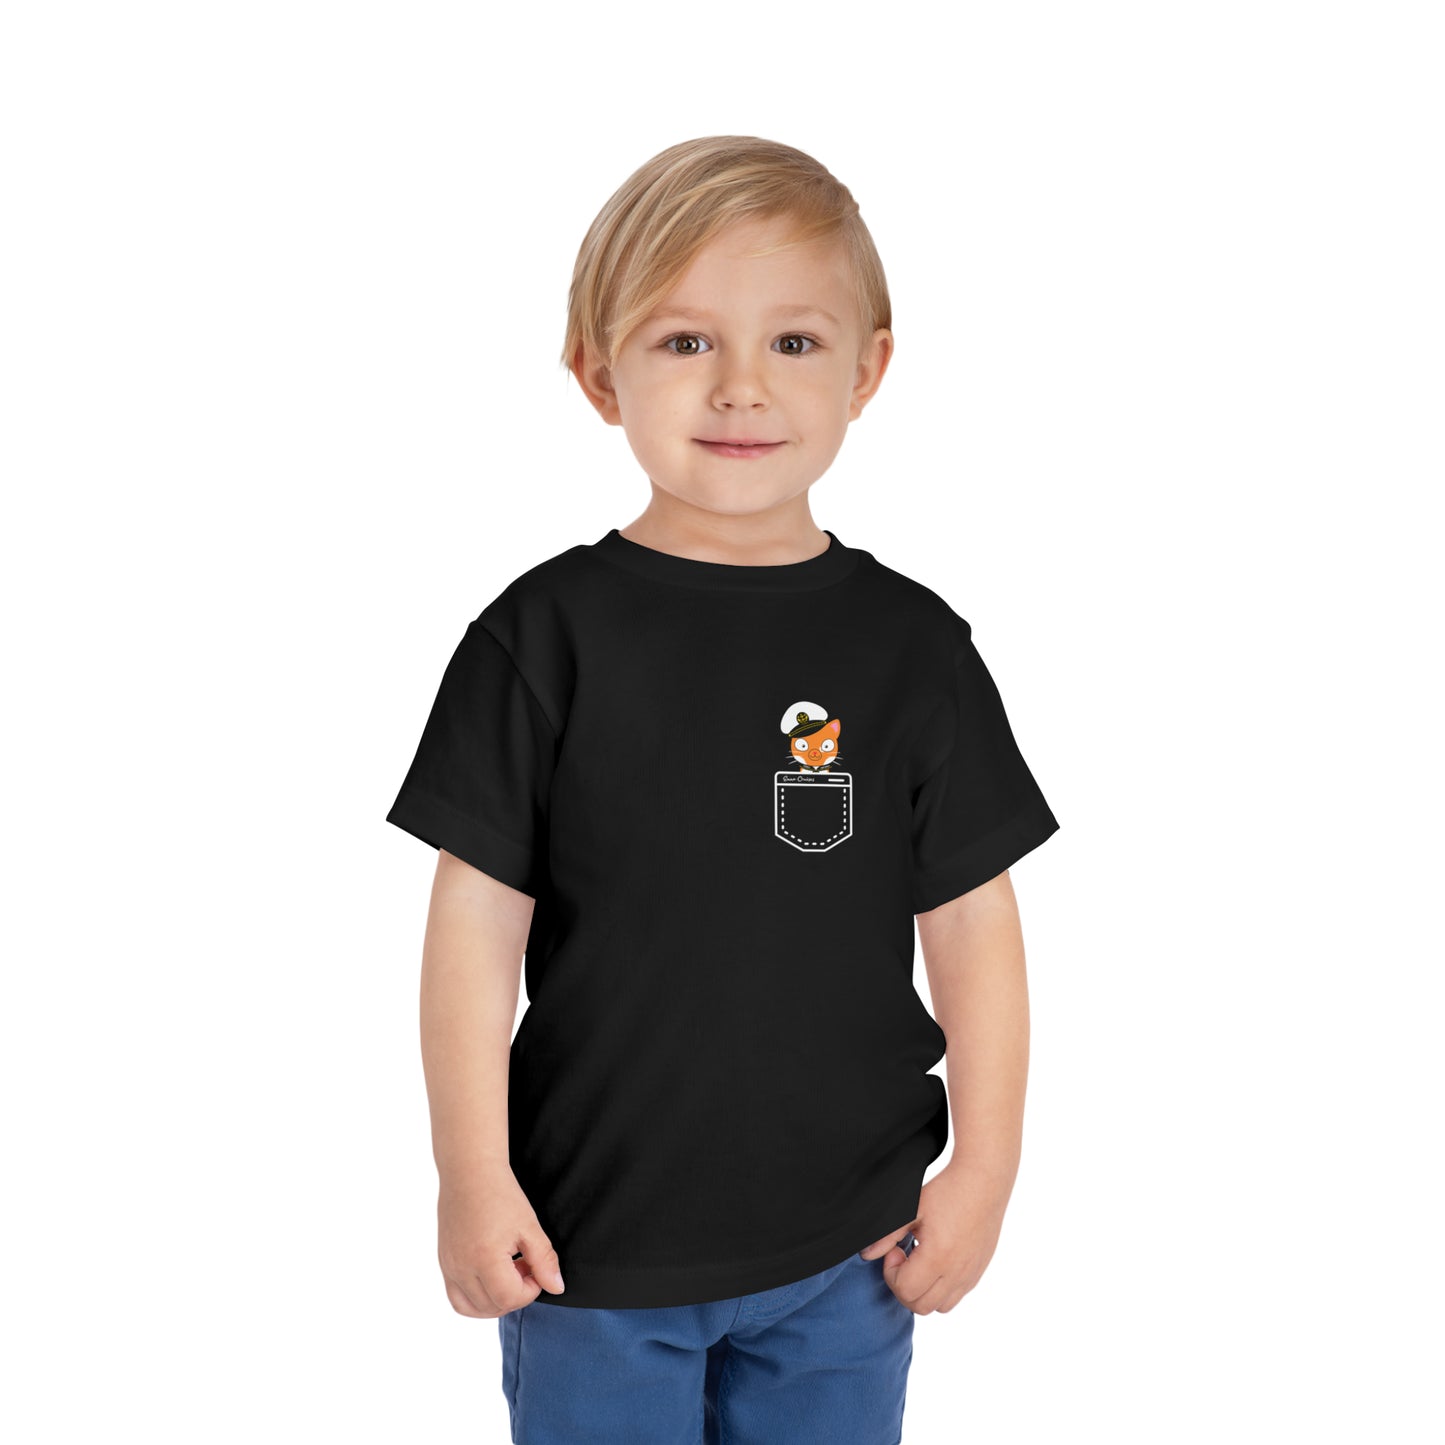 Capitán Hudson en tu bolsillo - Camiseta UNISEX para niños pequeños 